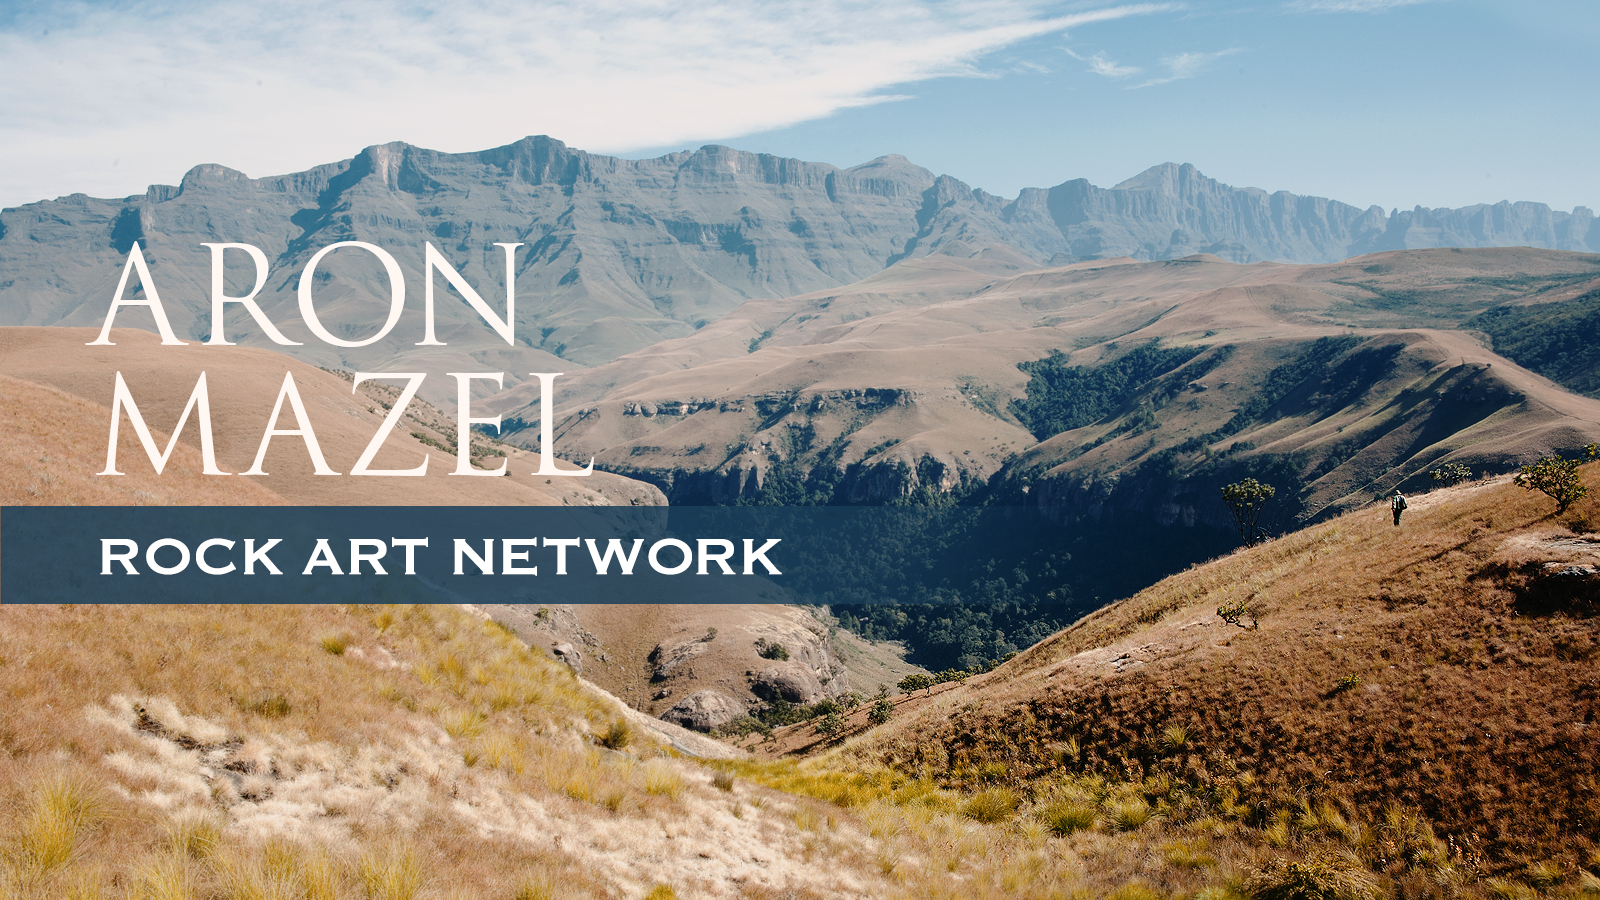 Rock Art Network Aron Mazel